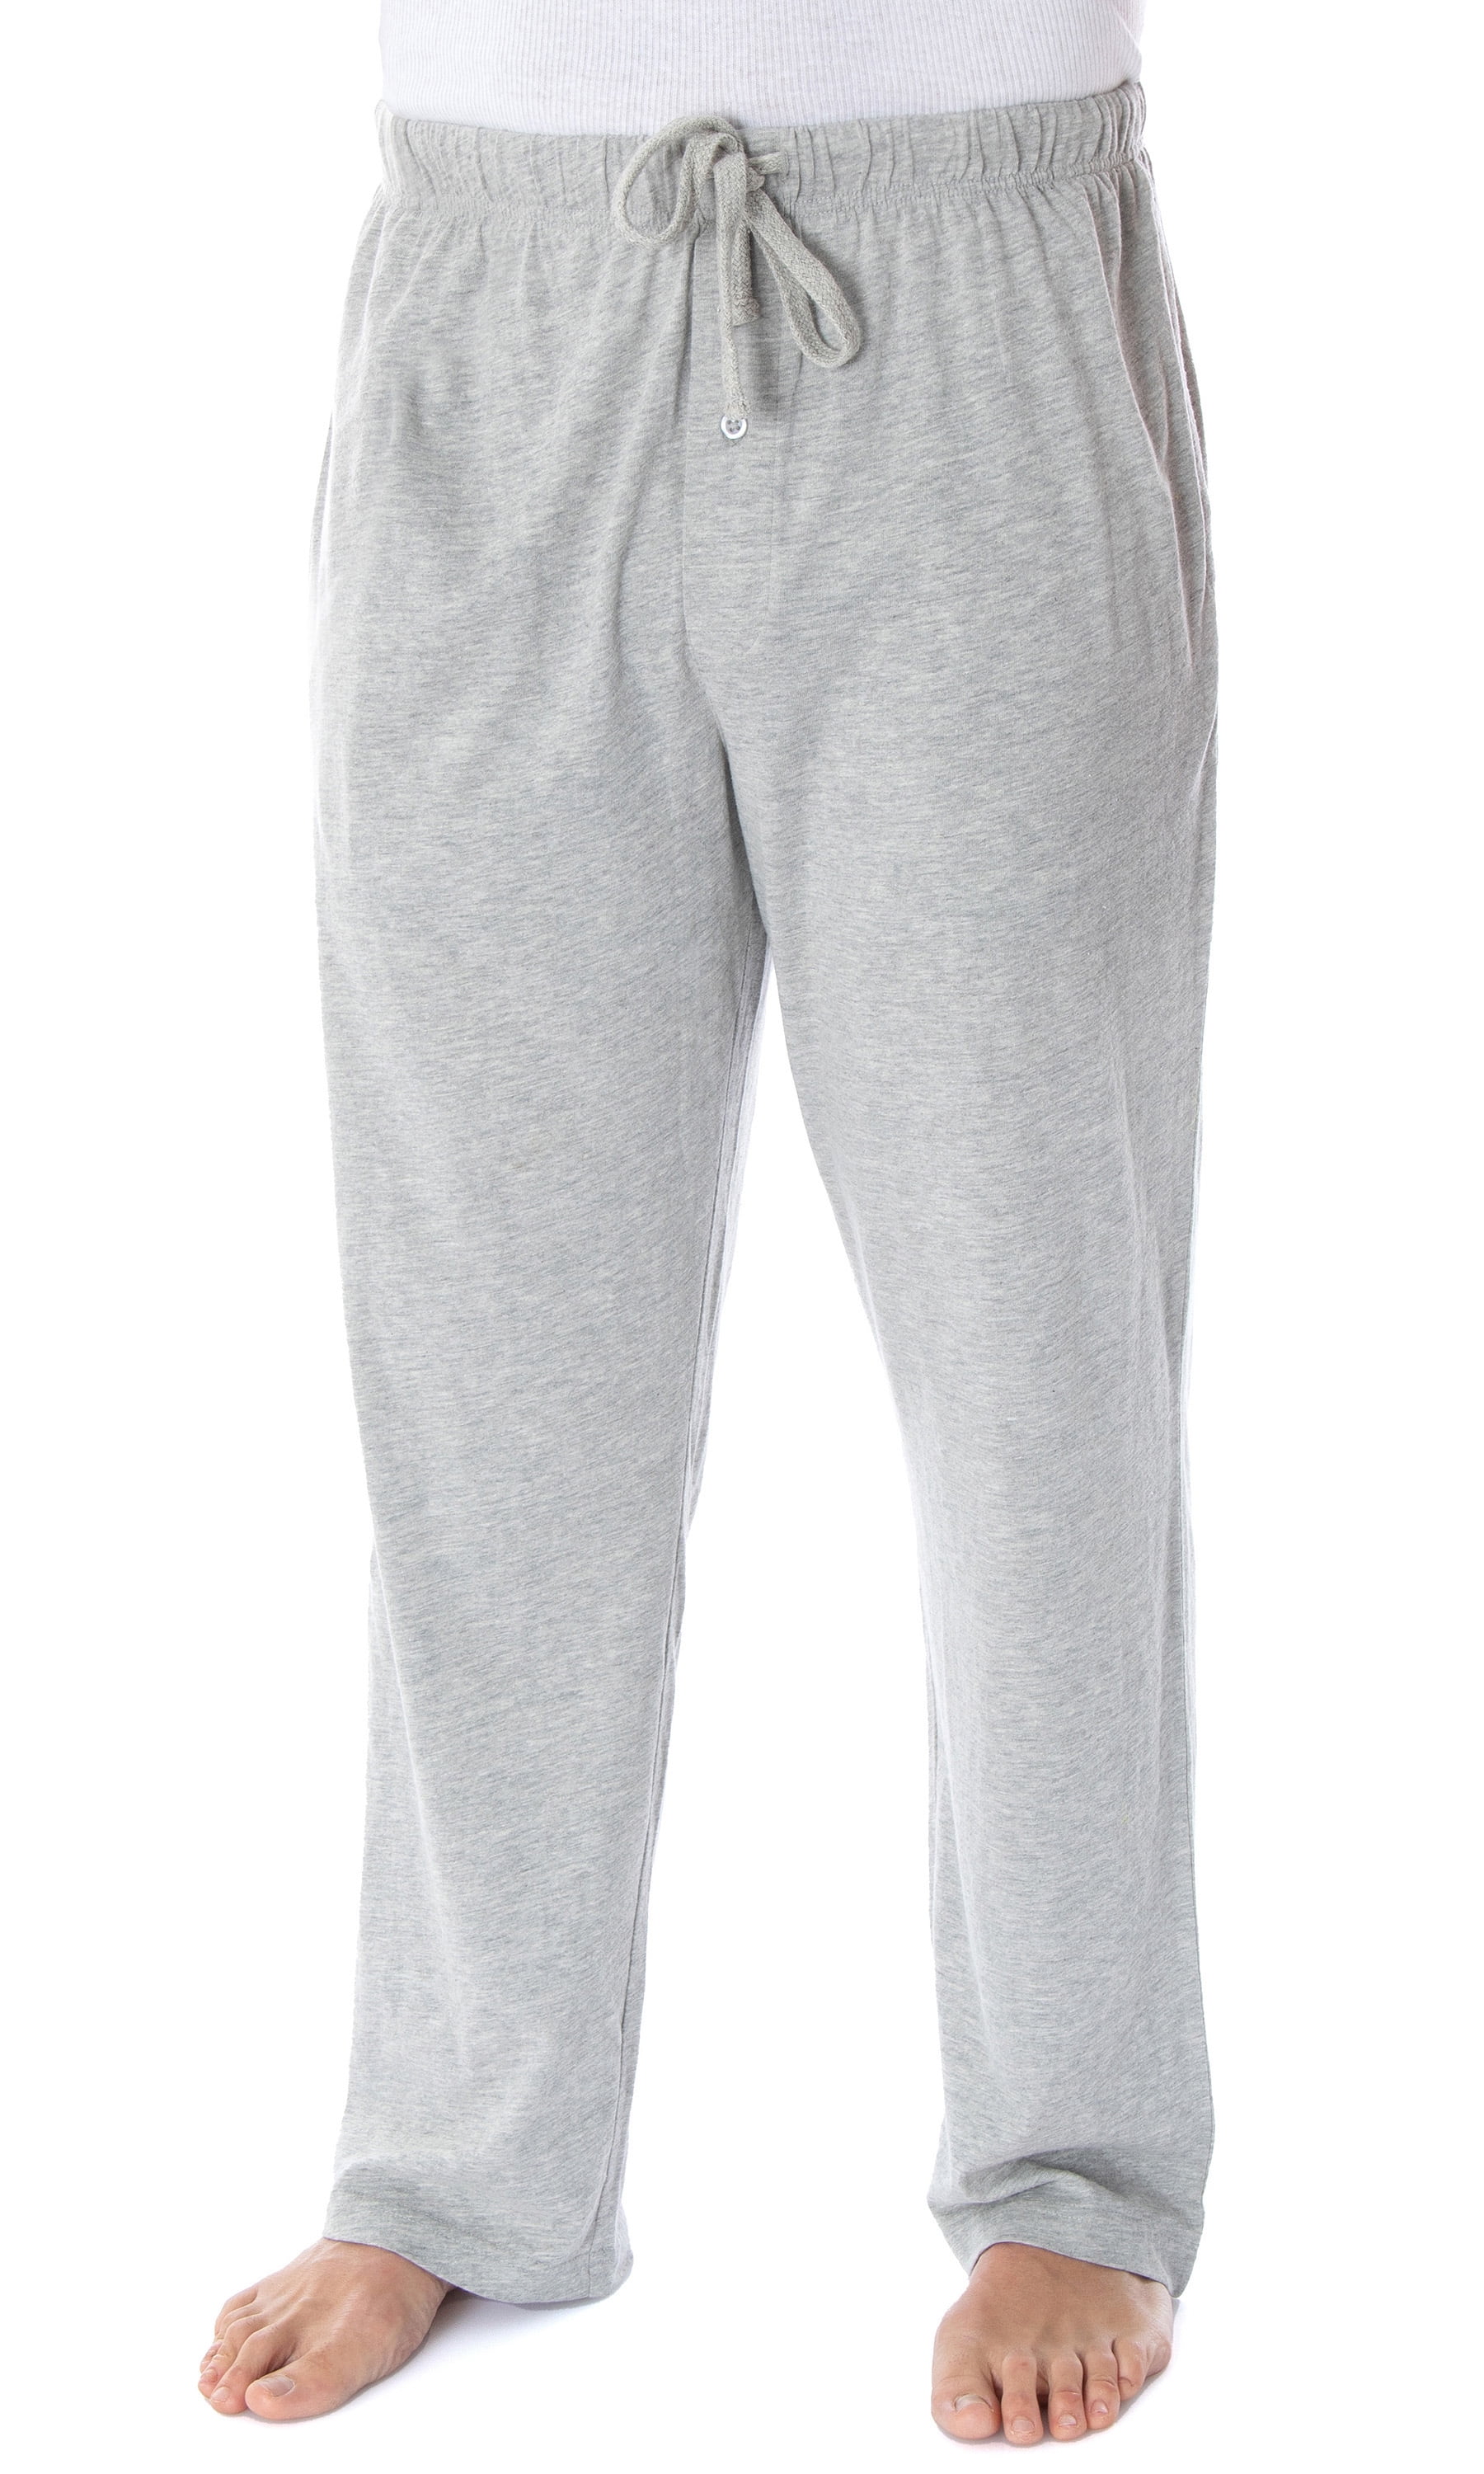 Buy Zakir 3 Pack:Men's 100% Cotton Lounge Pants-ST 6,3XL at Amazon.in